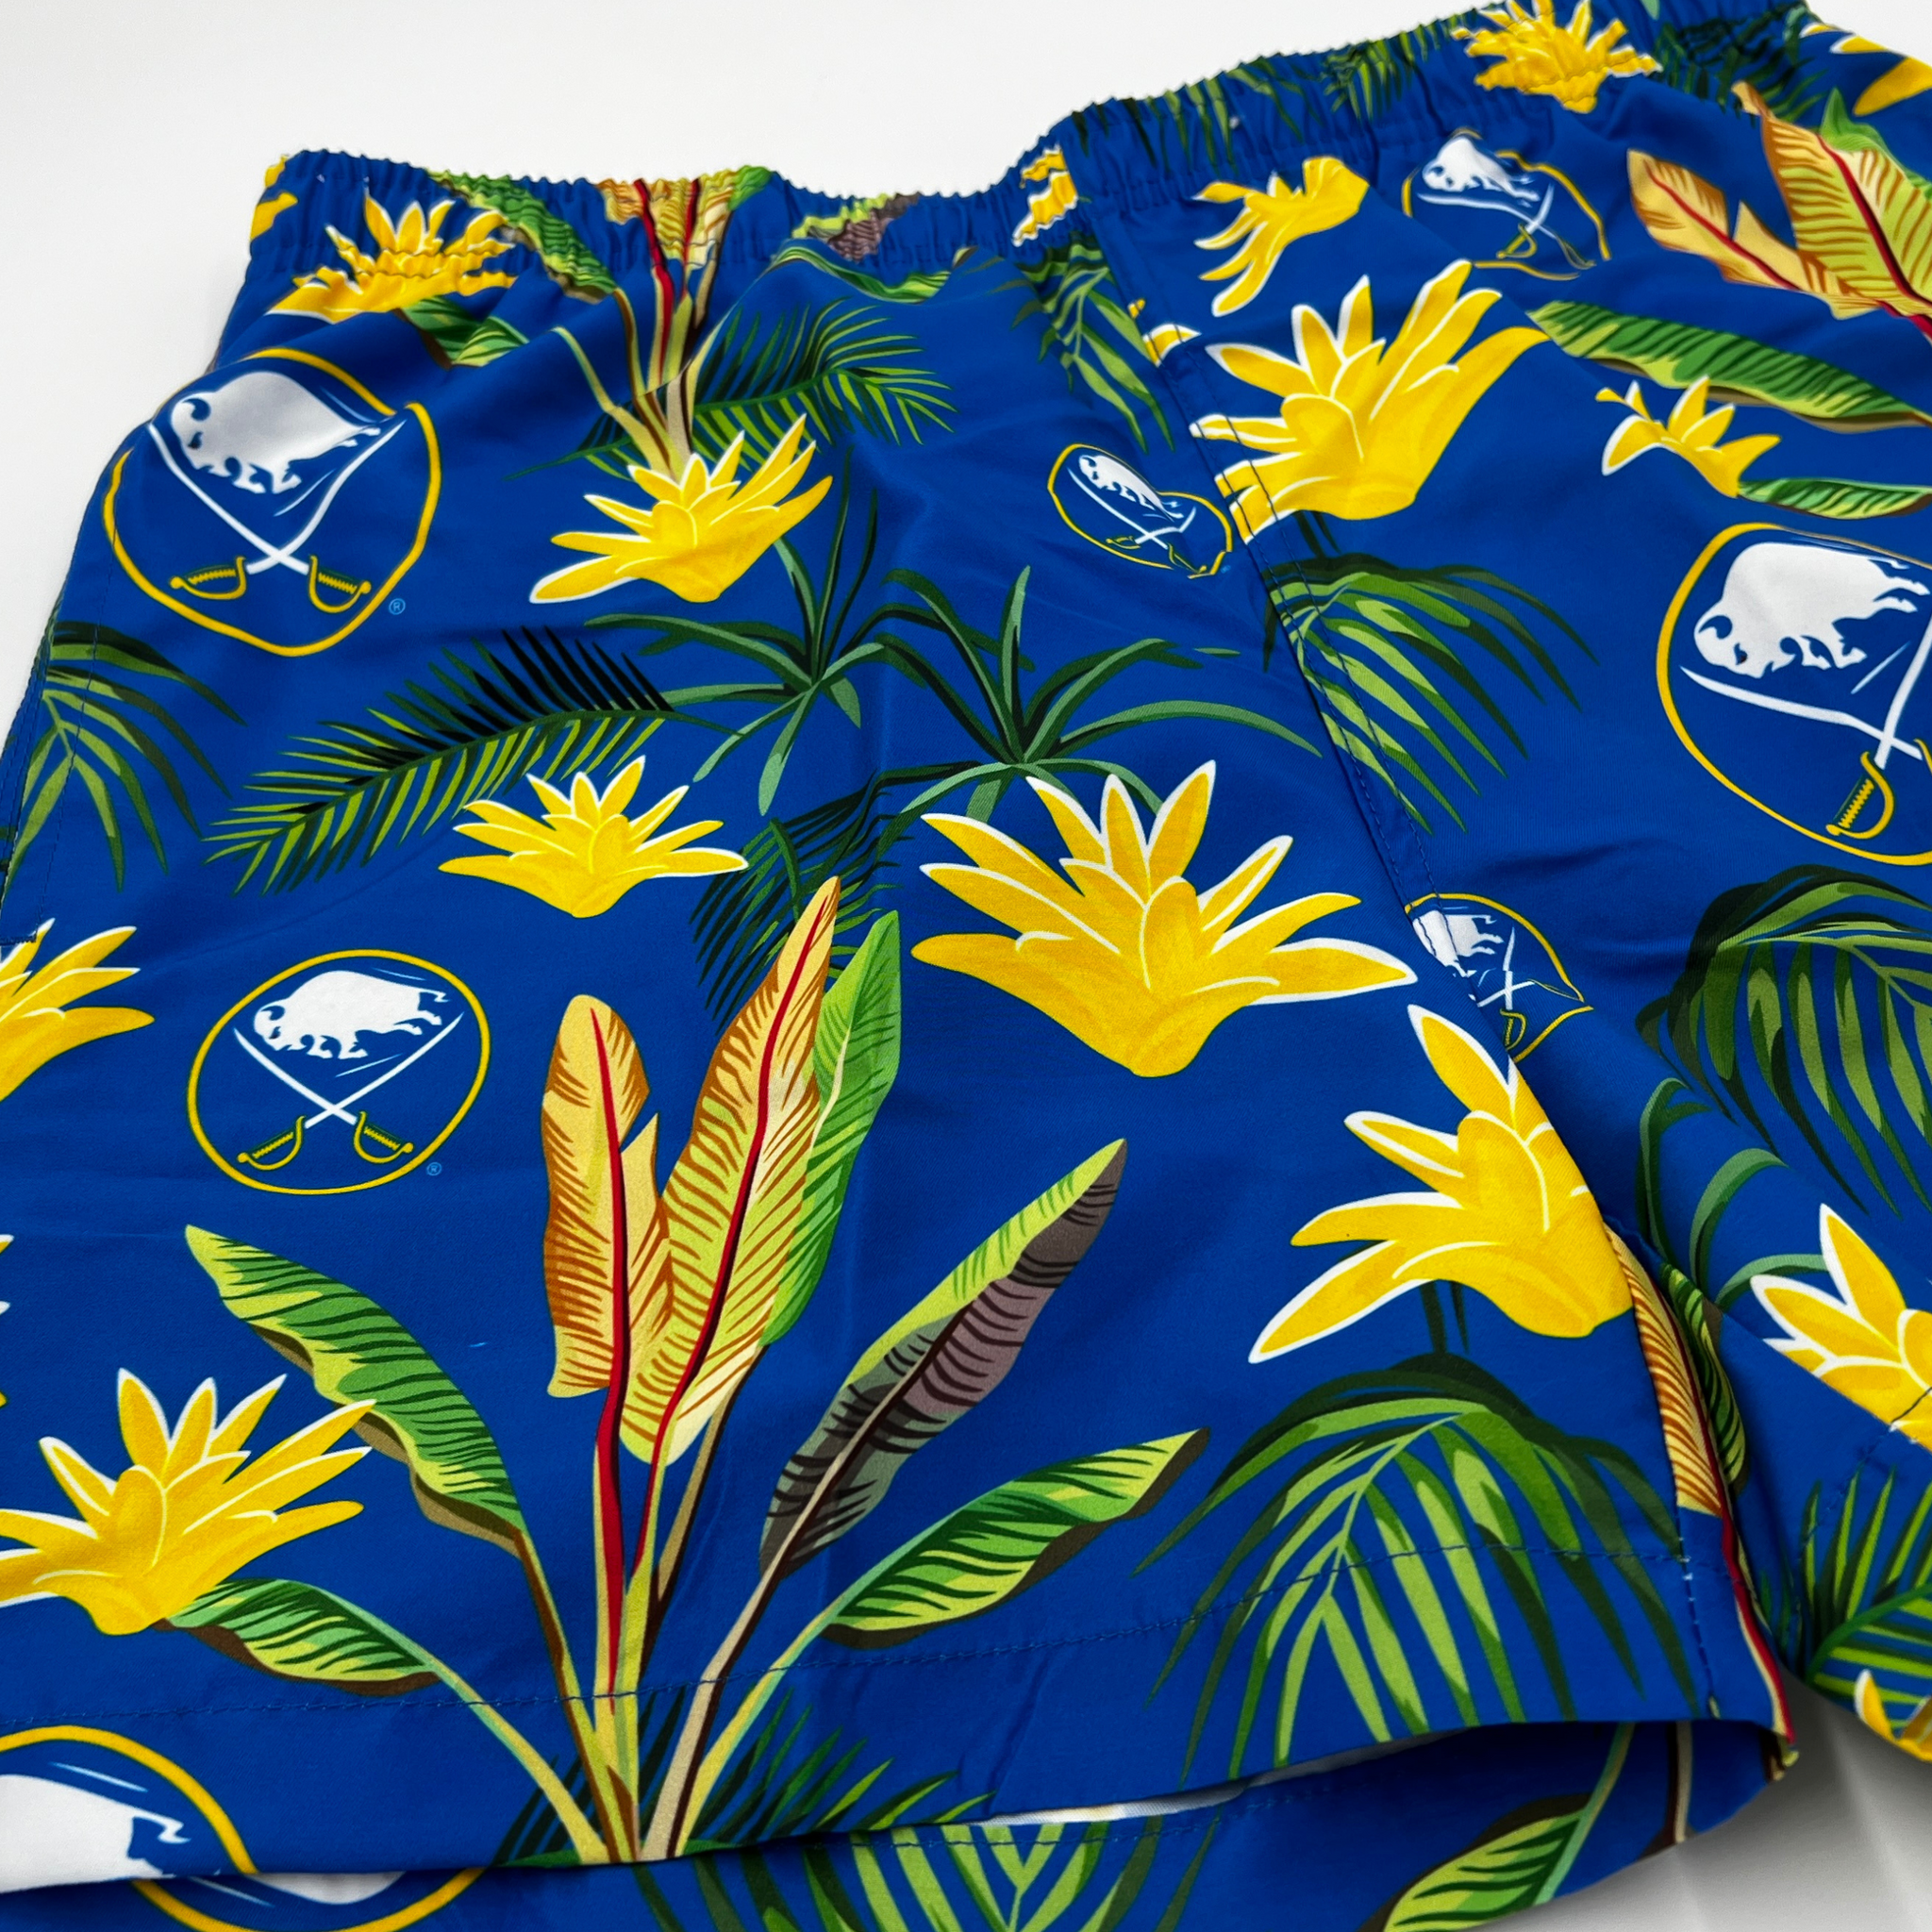 Buffalo Sabres Royal Blue With Floral Design Swim Trunks